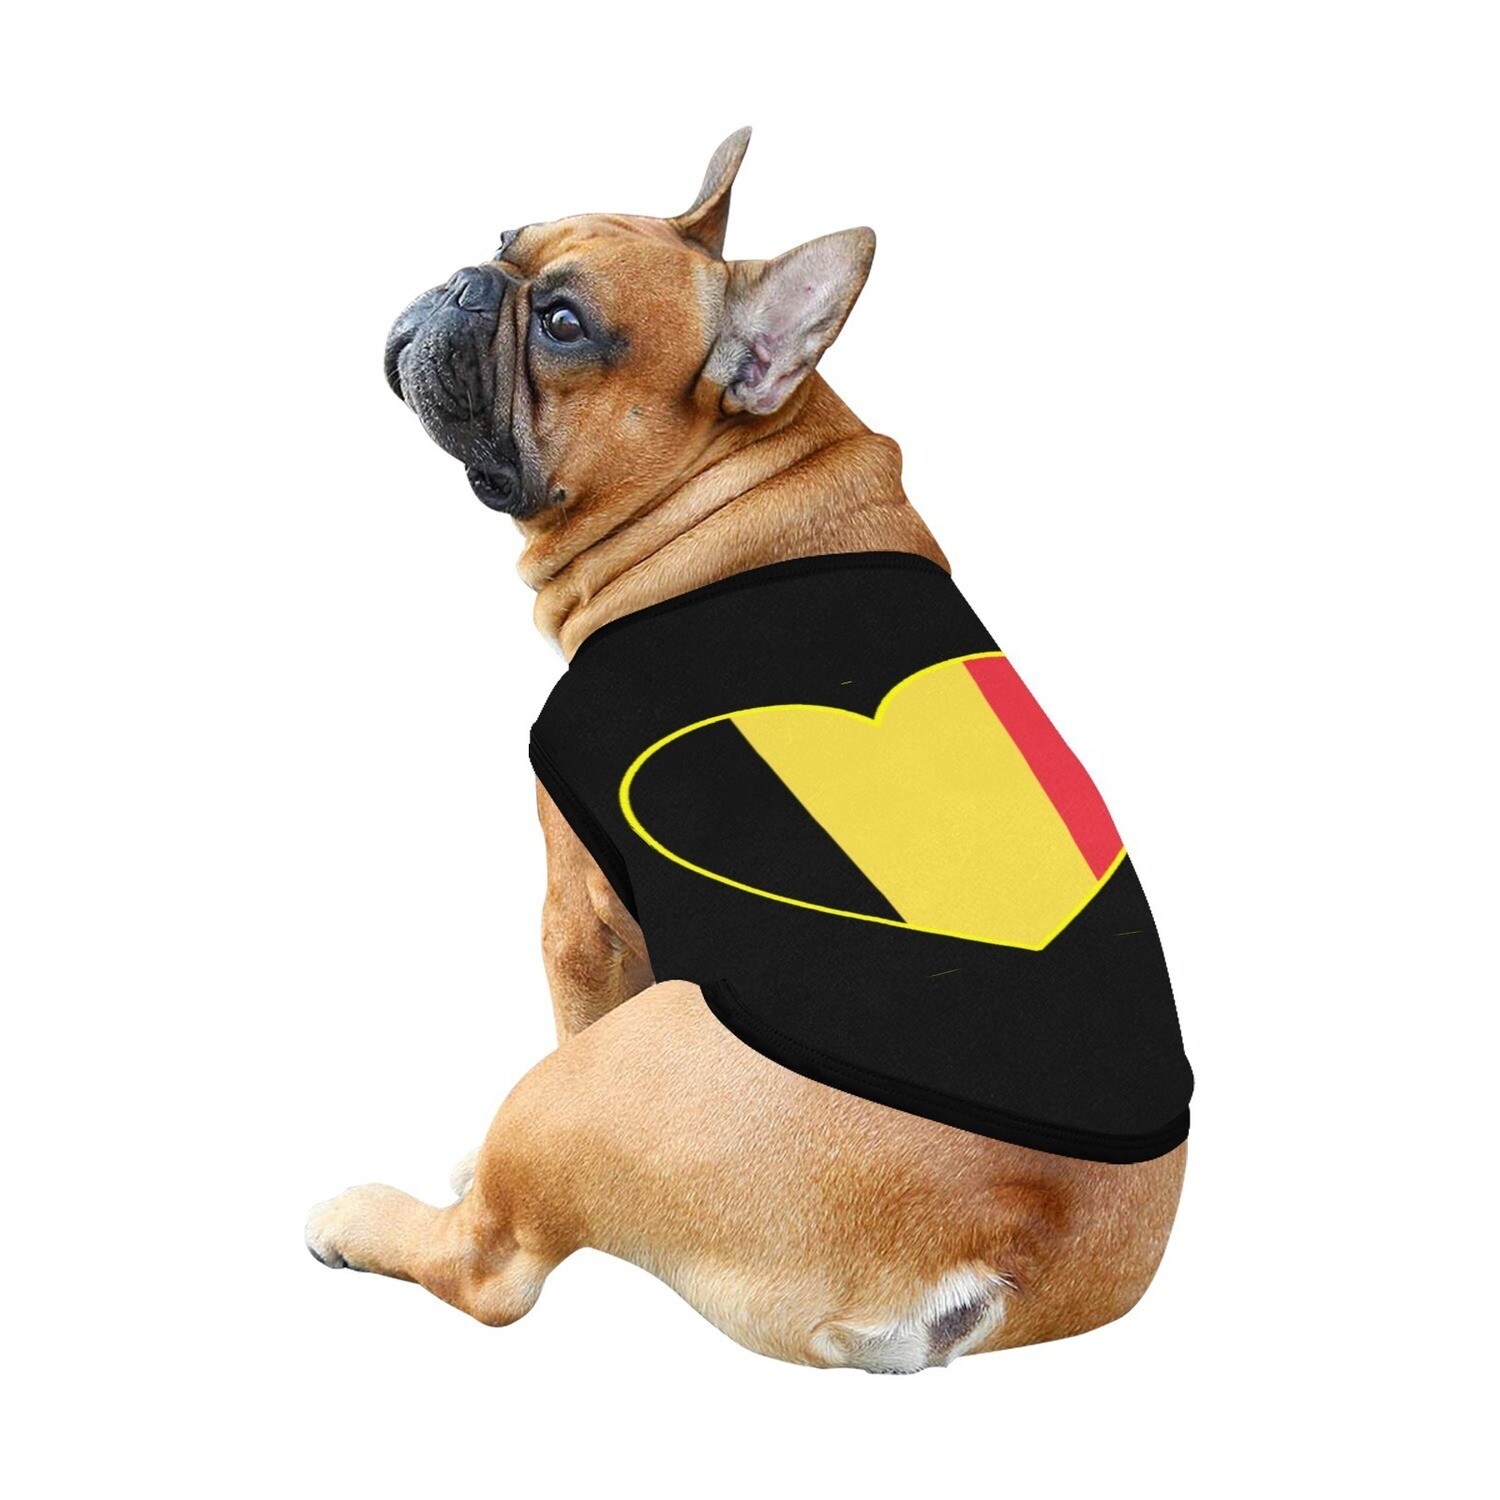 🐕🇧🇪I love Belgium, Belgian flag, dog t-shirt, dog gift, dog tank top, dog shirt, dog clothes, gift, 7 sizes XS to 3XL, heart shape, black